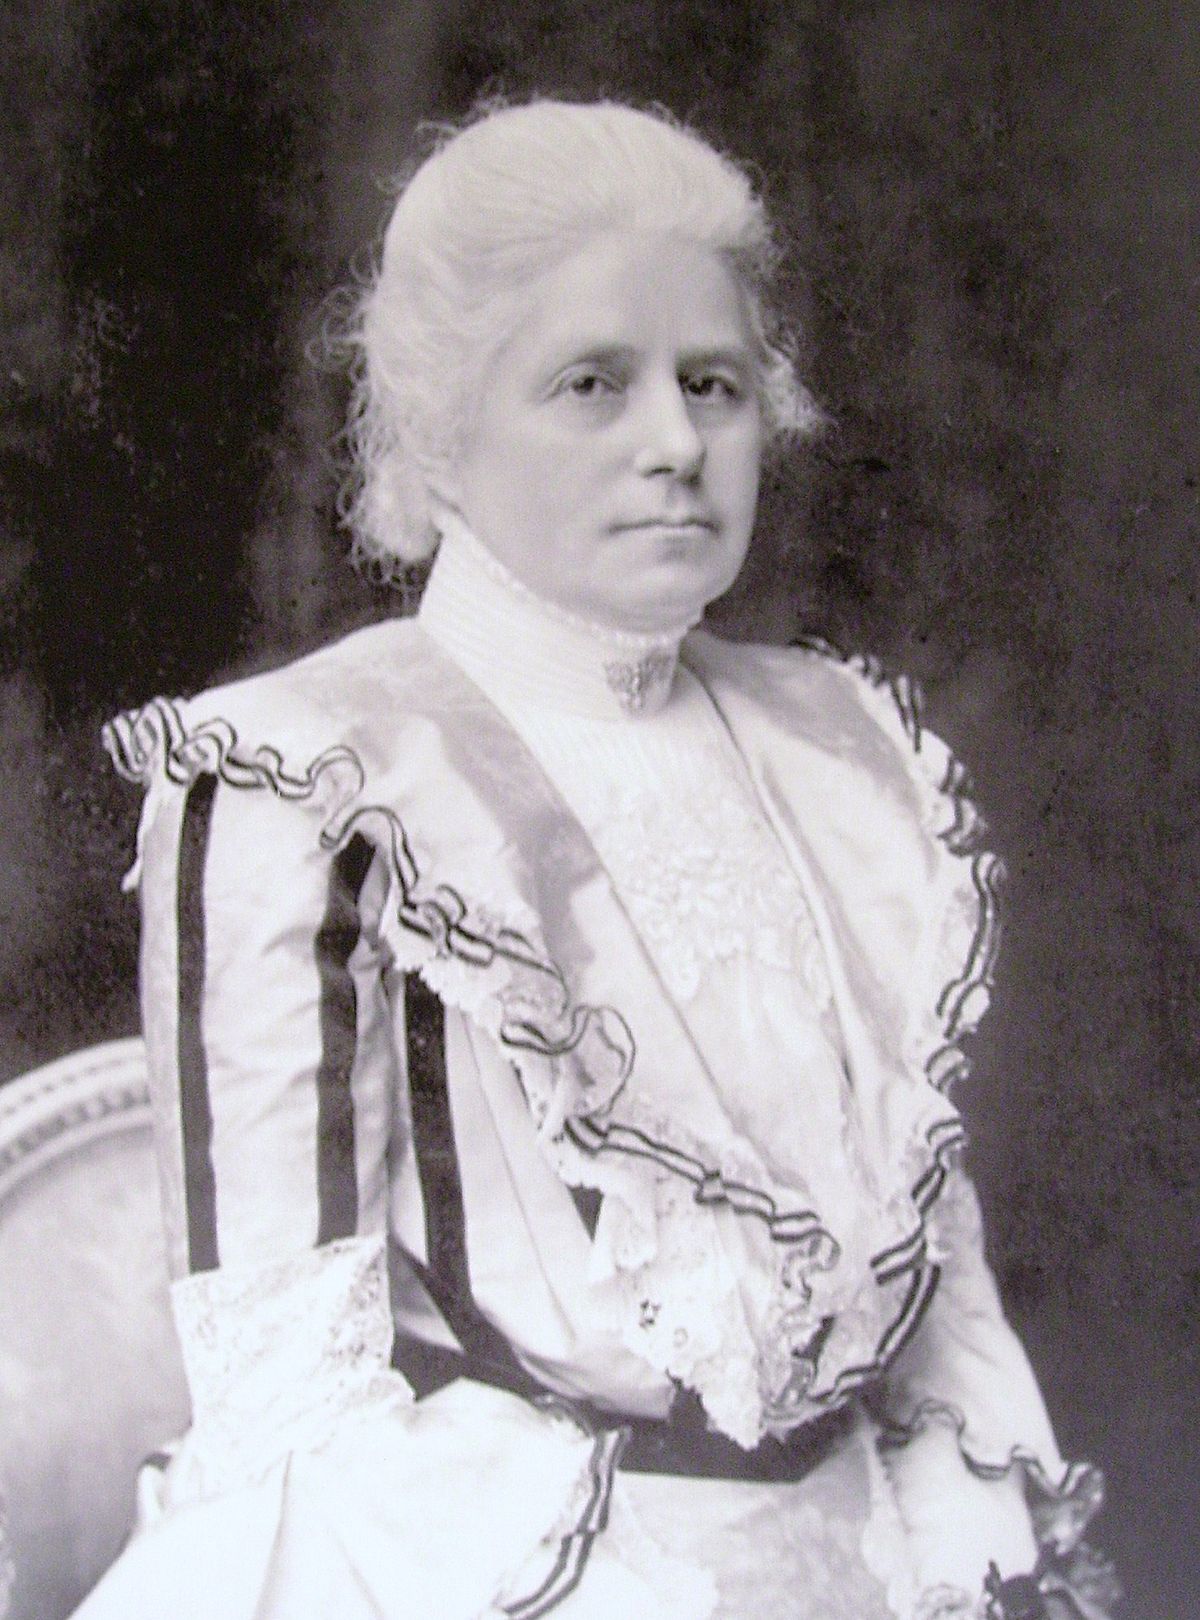 Wilhelmina von Hallwyl, circa 1902. Photographer unknown (Hallwylska museet/Wikimedia Commons)